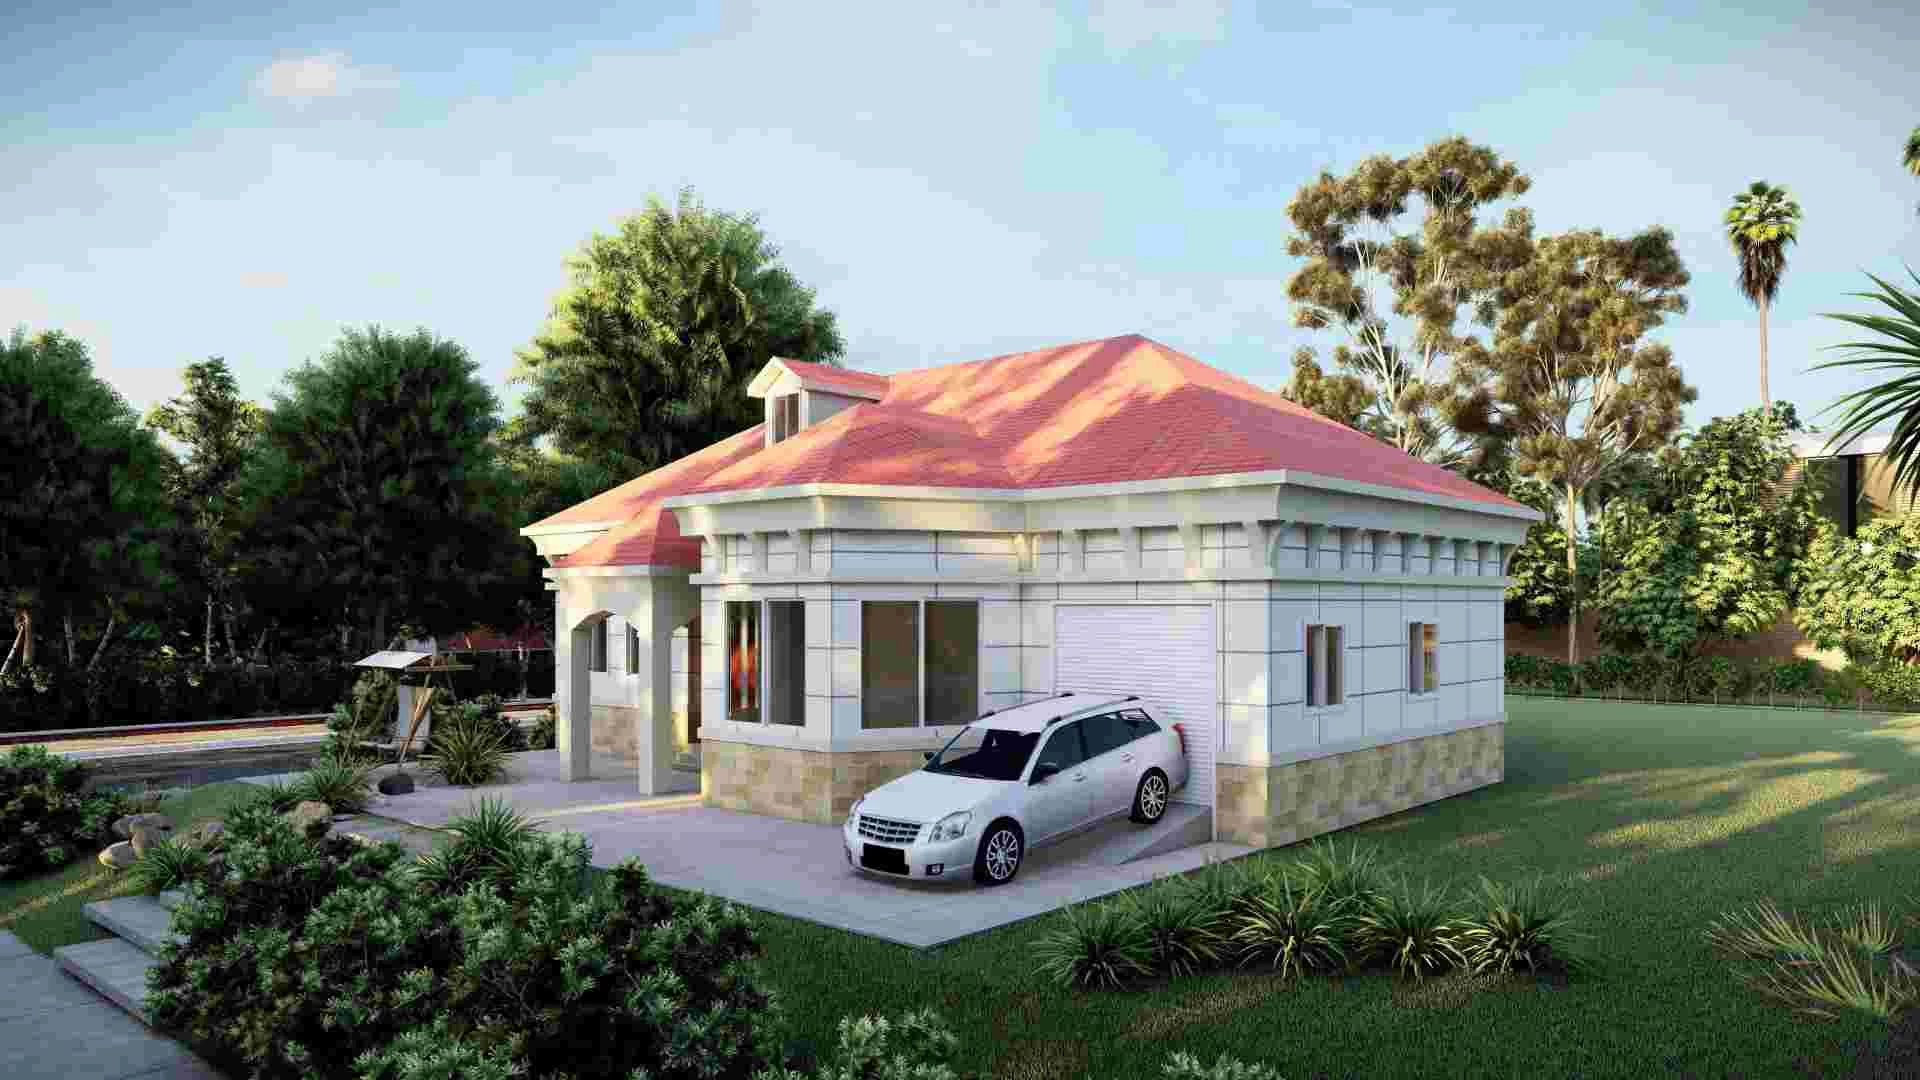 Tsina Prefab Homes steel structure Villa Prefab Building Design With garahe - QB11 Manufacturer